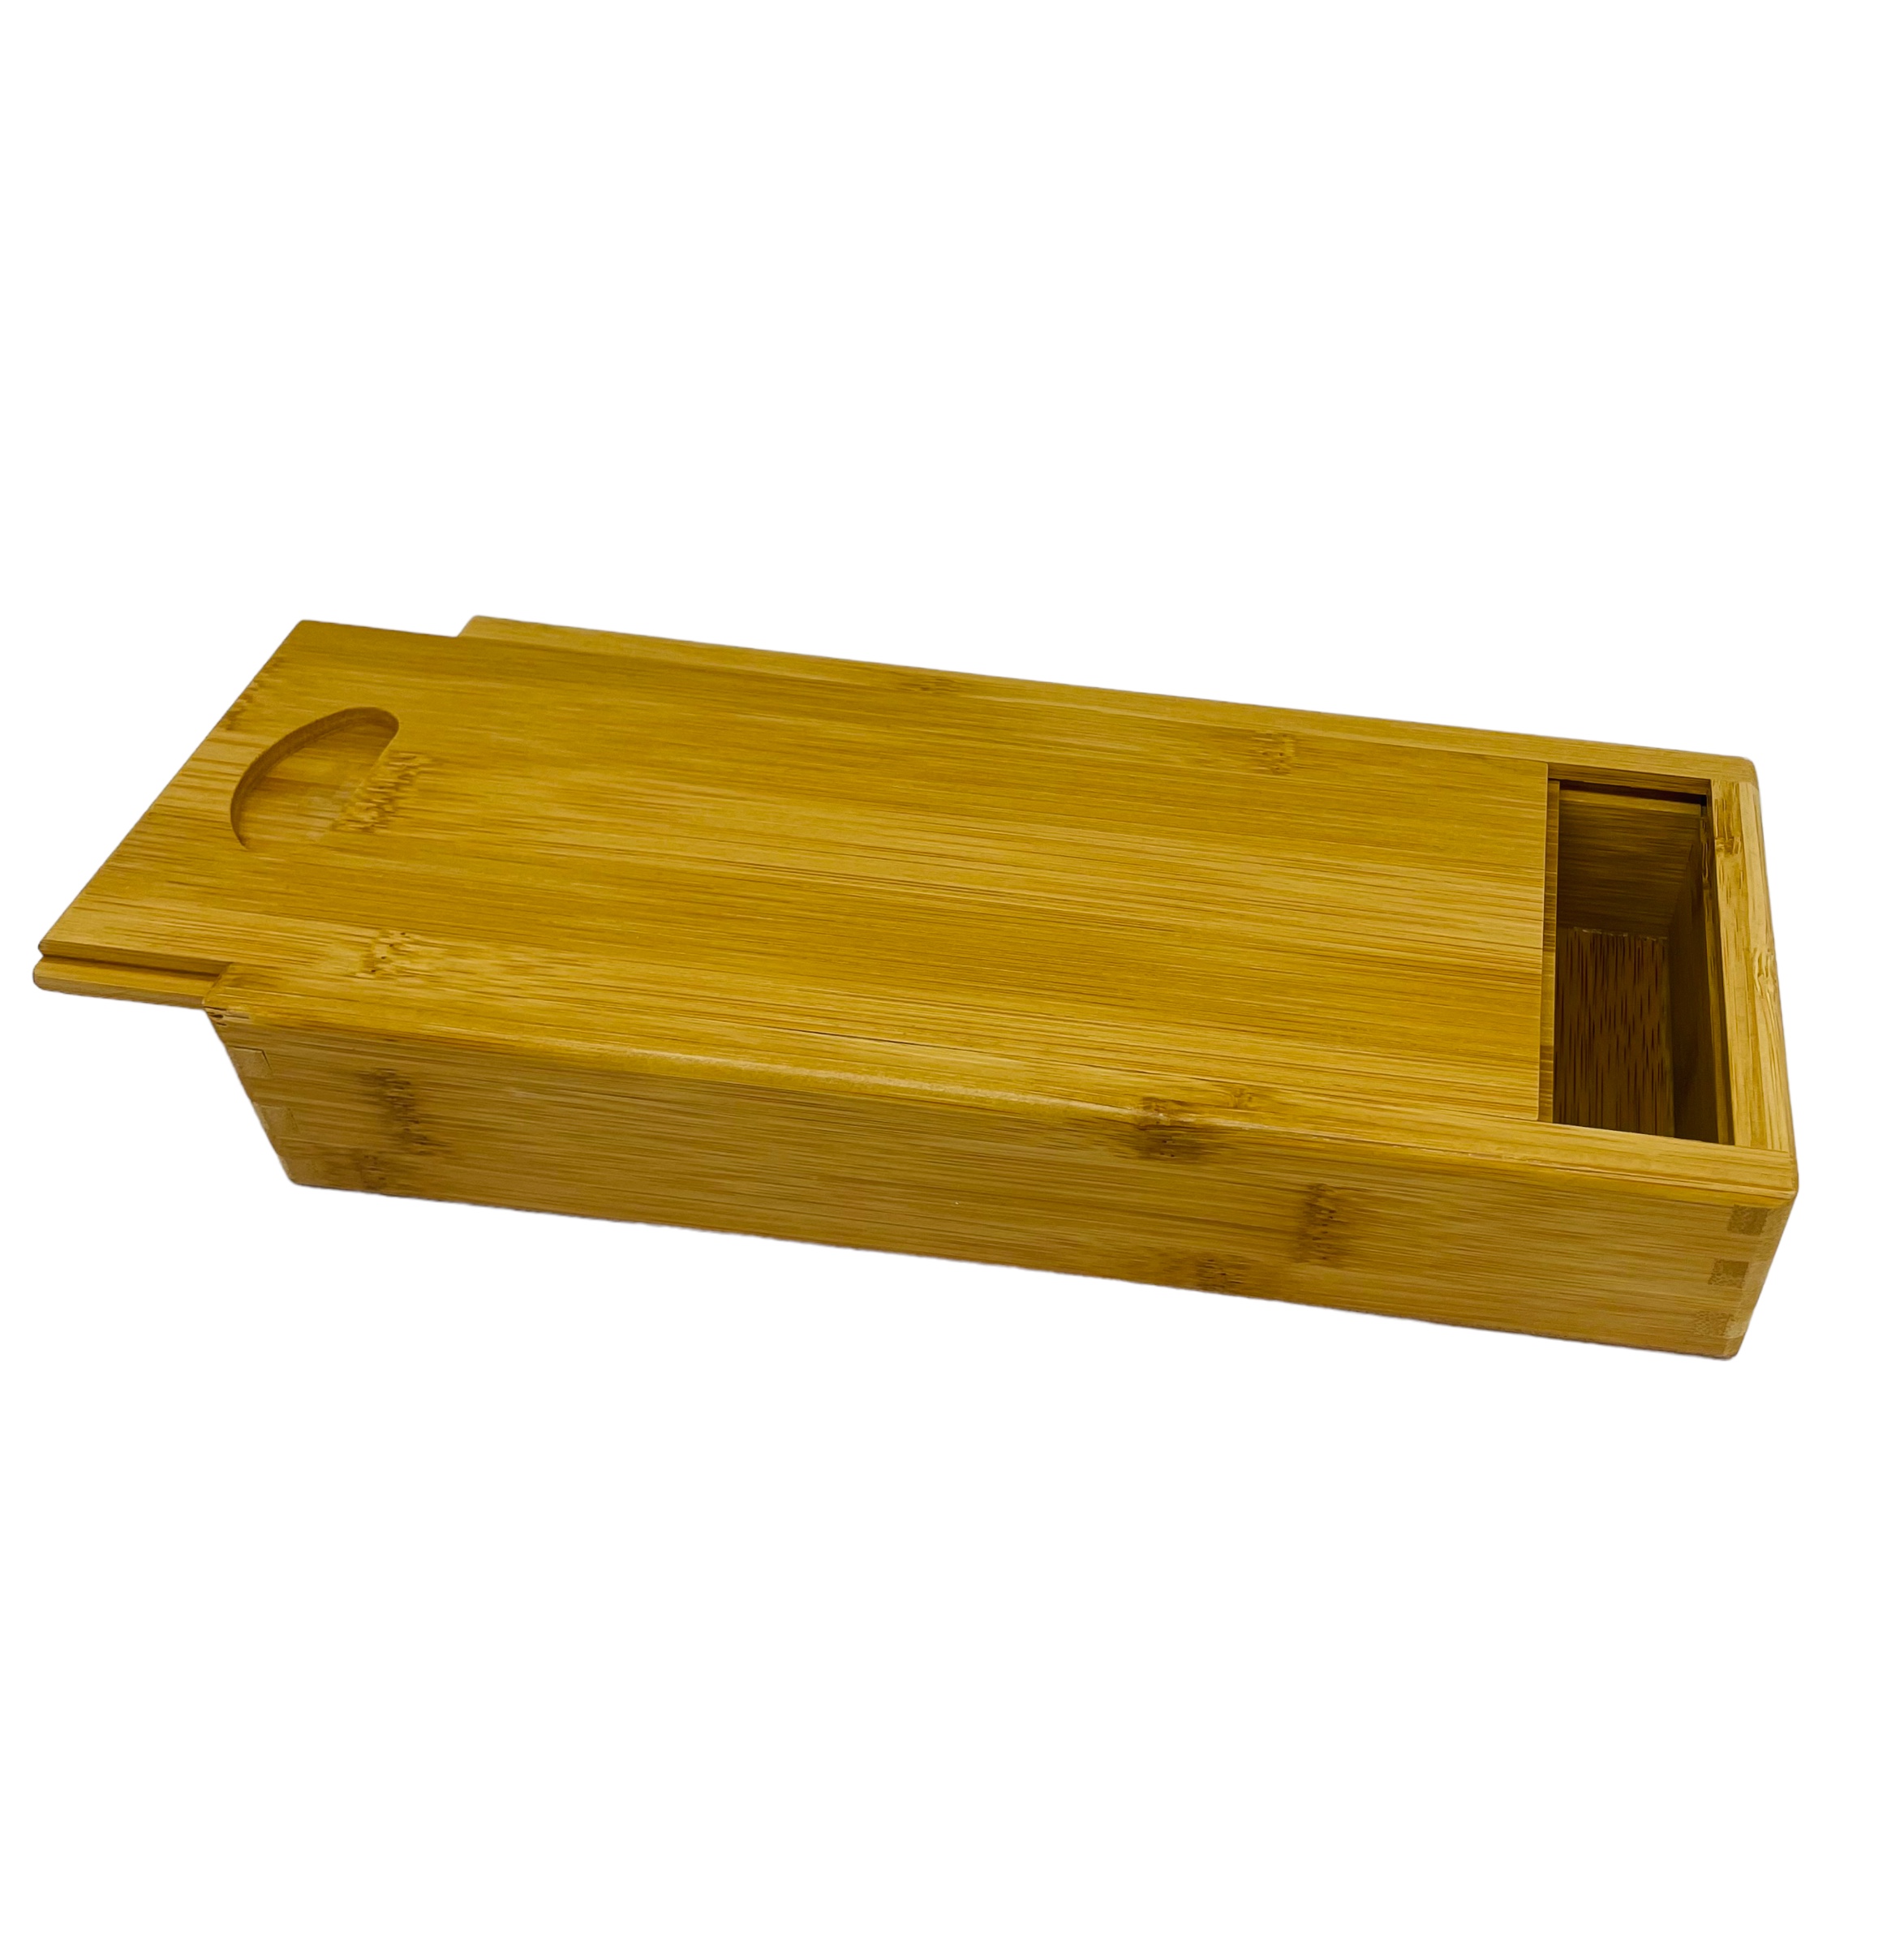 Caja bambu con tapa corredera 25x11x5cm - ArtBendix